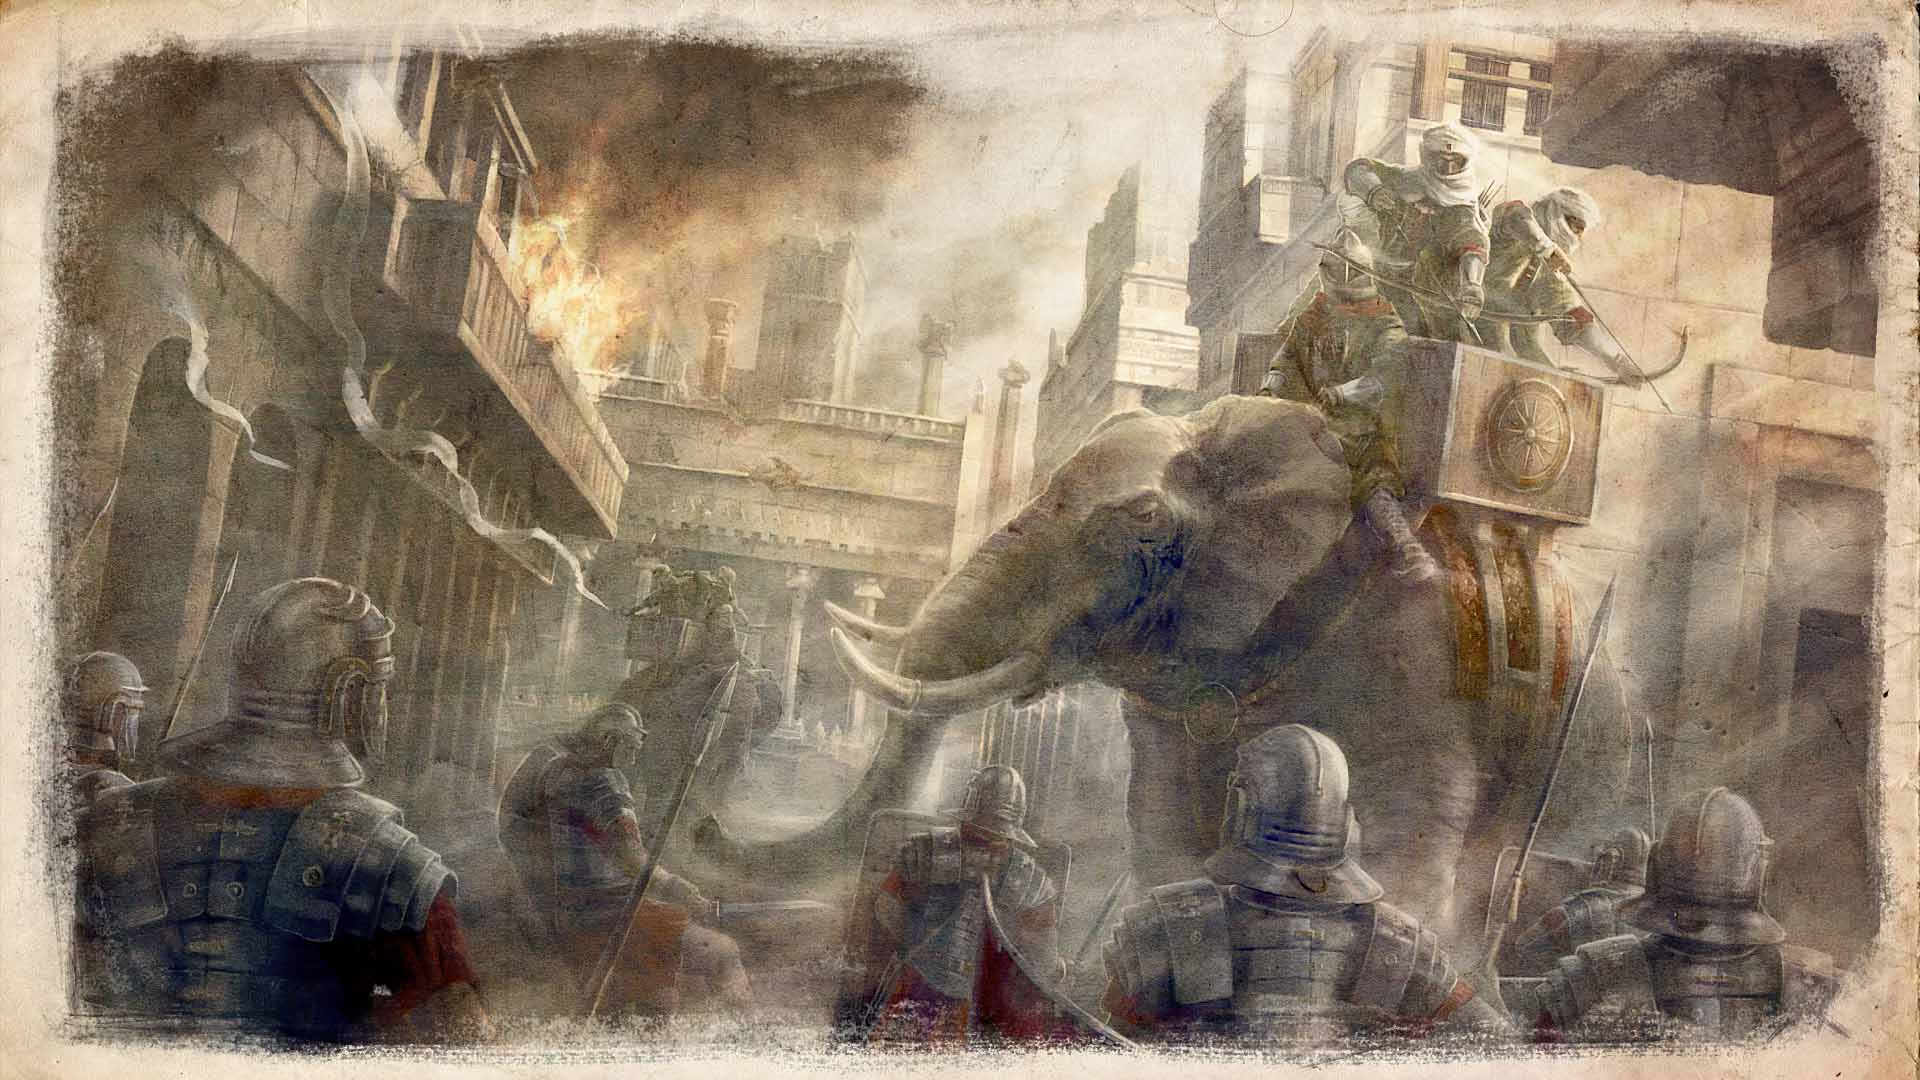 Wallpaper from Total War: Rome II